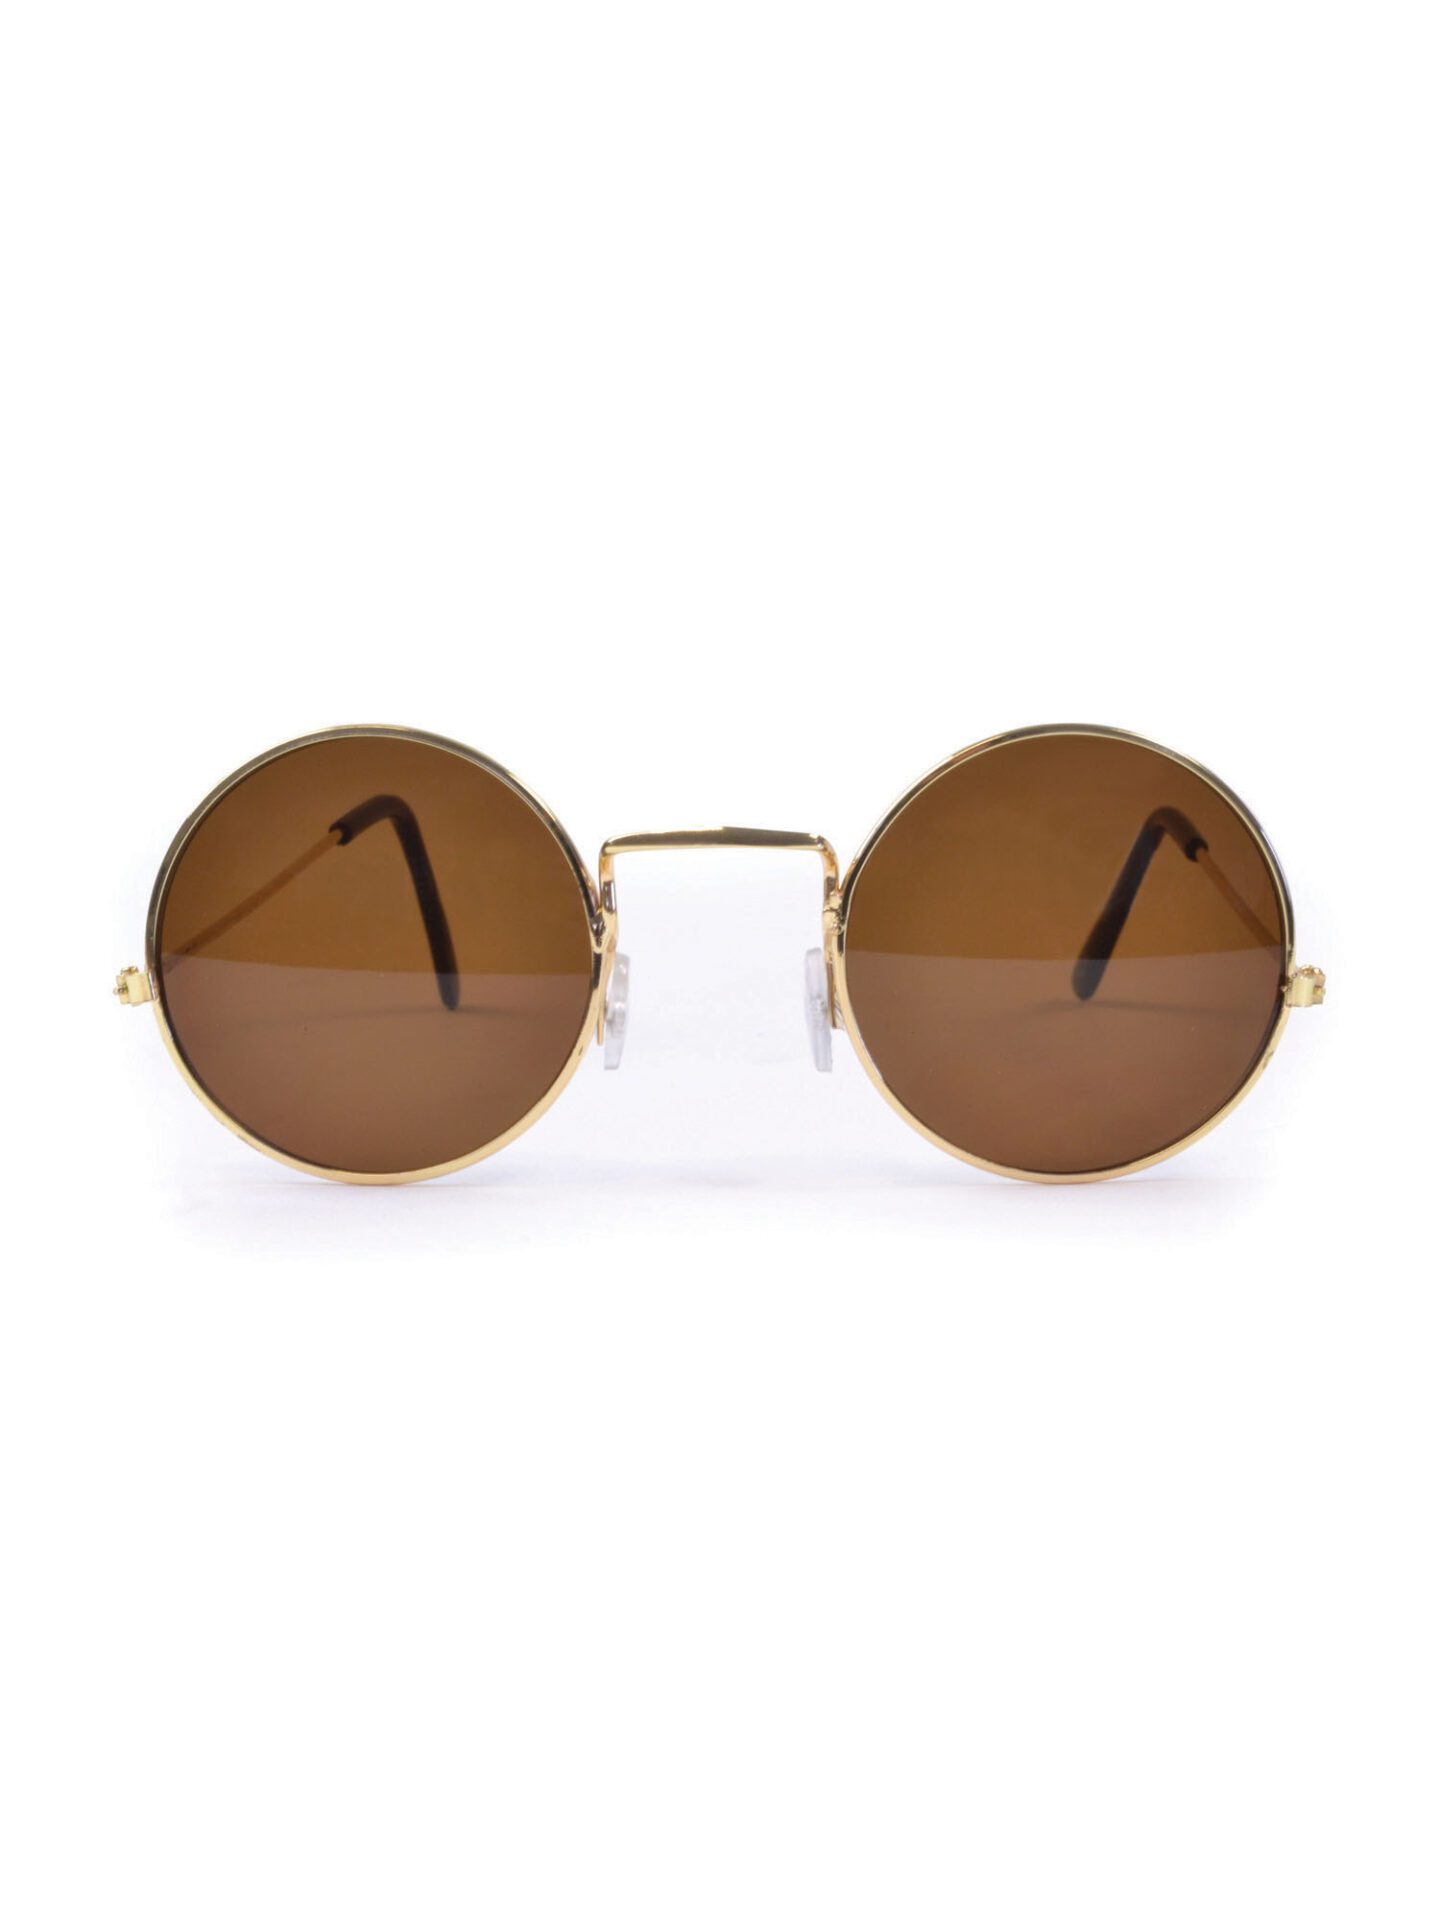 Small Burnt Orange John Lennon Style Round Sunglasses Adults Mens Womens  Glasses | eBay